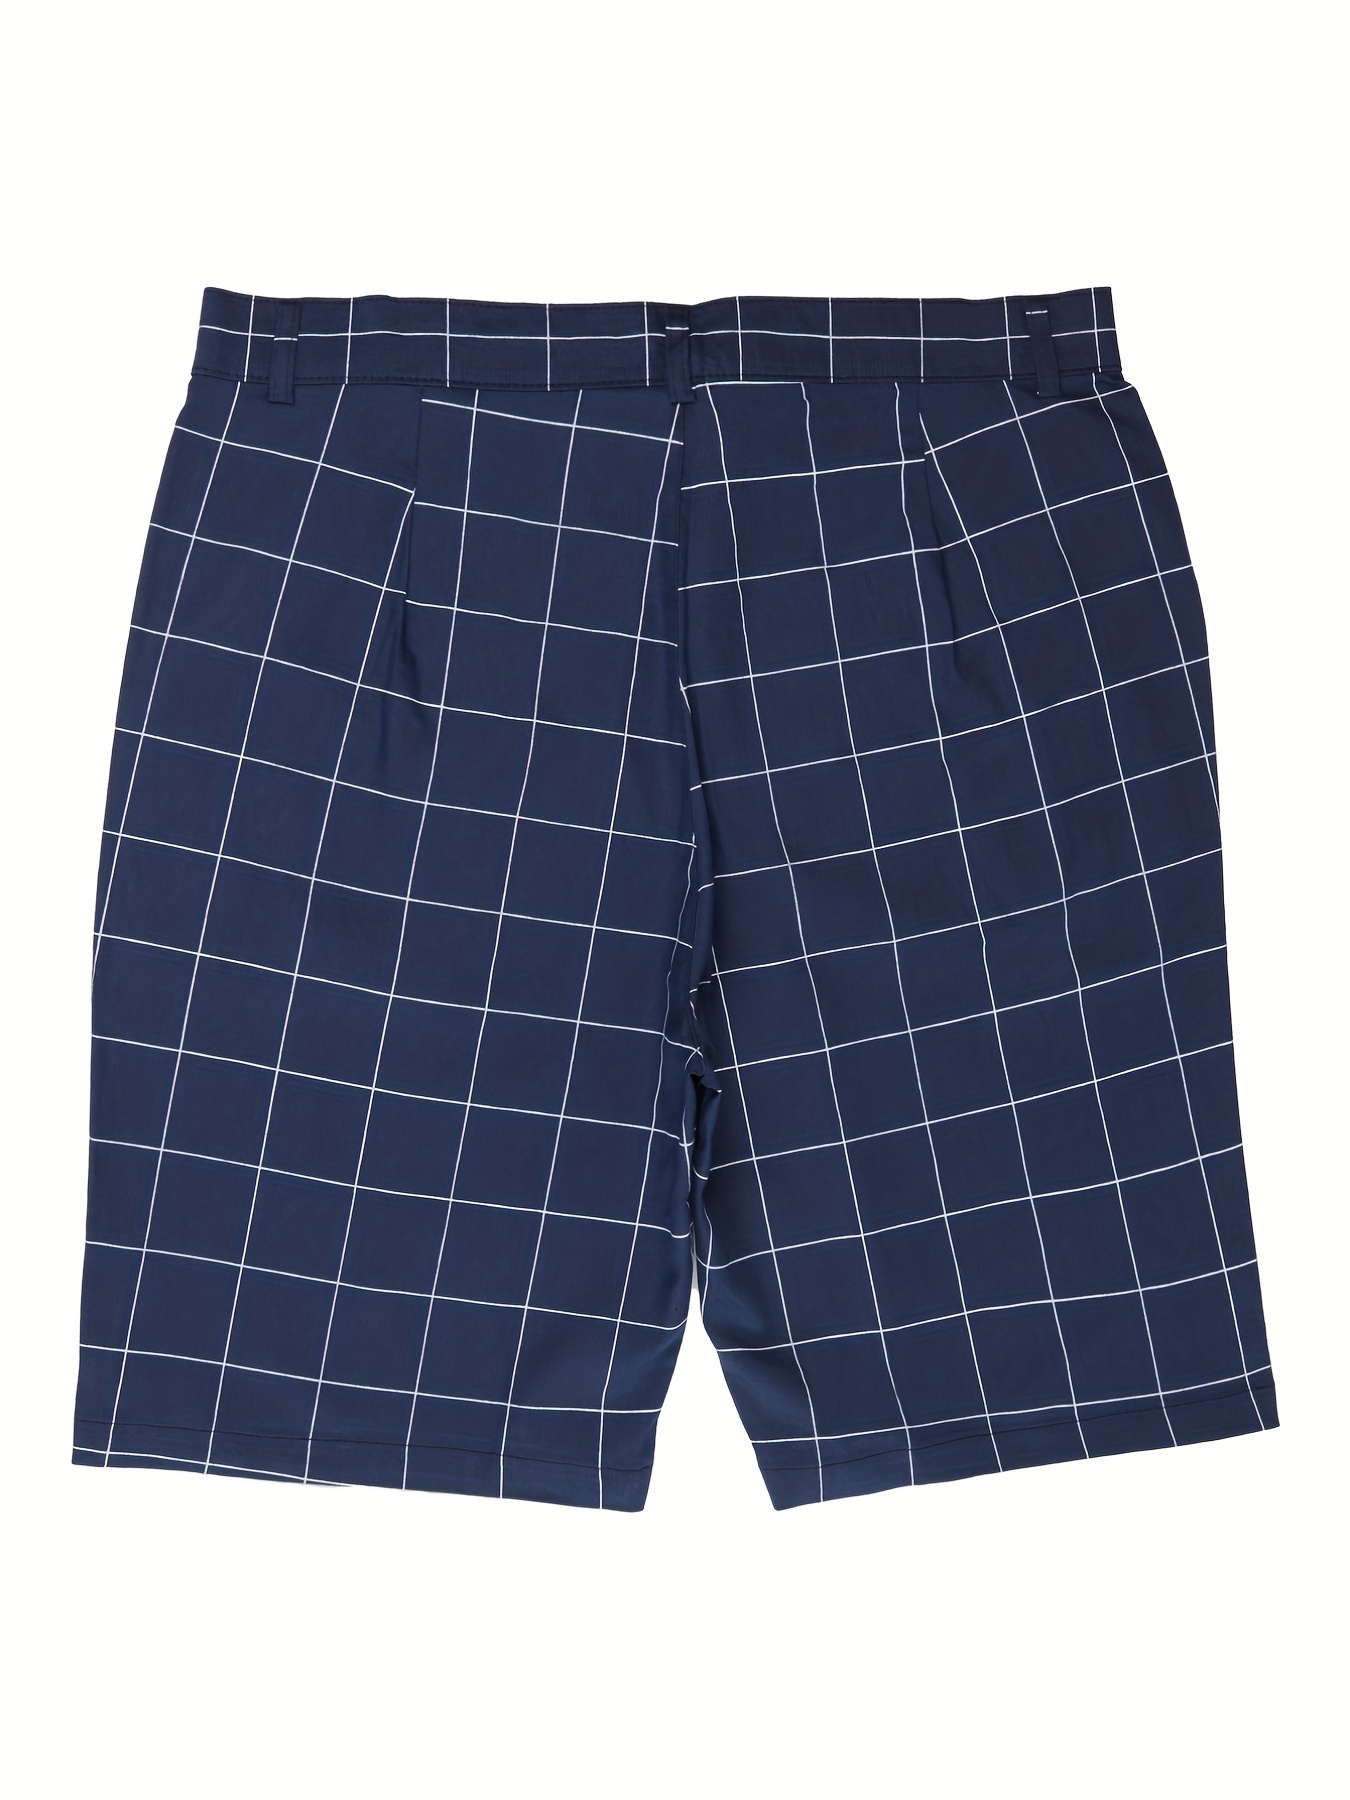 Men's Tencel Micro Modal Cotton Elastane Stretch Regular Fit Checkered  Sleep Shorts with Side Pockets - Light Blue Print